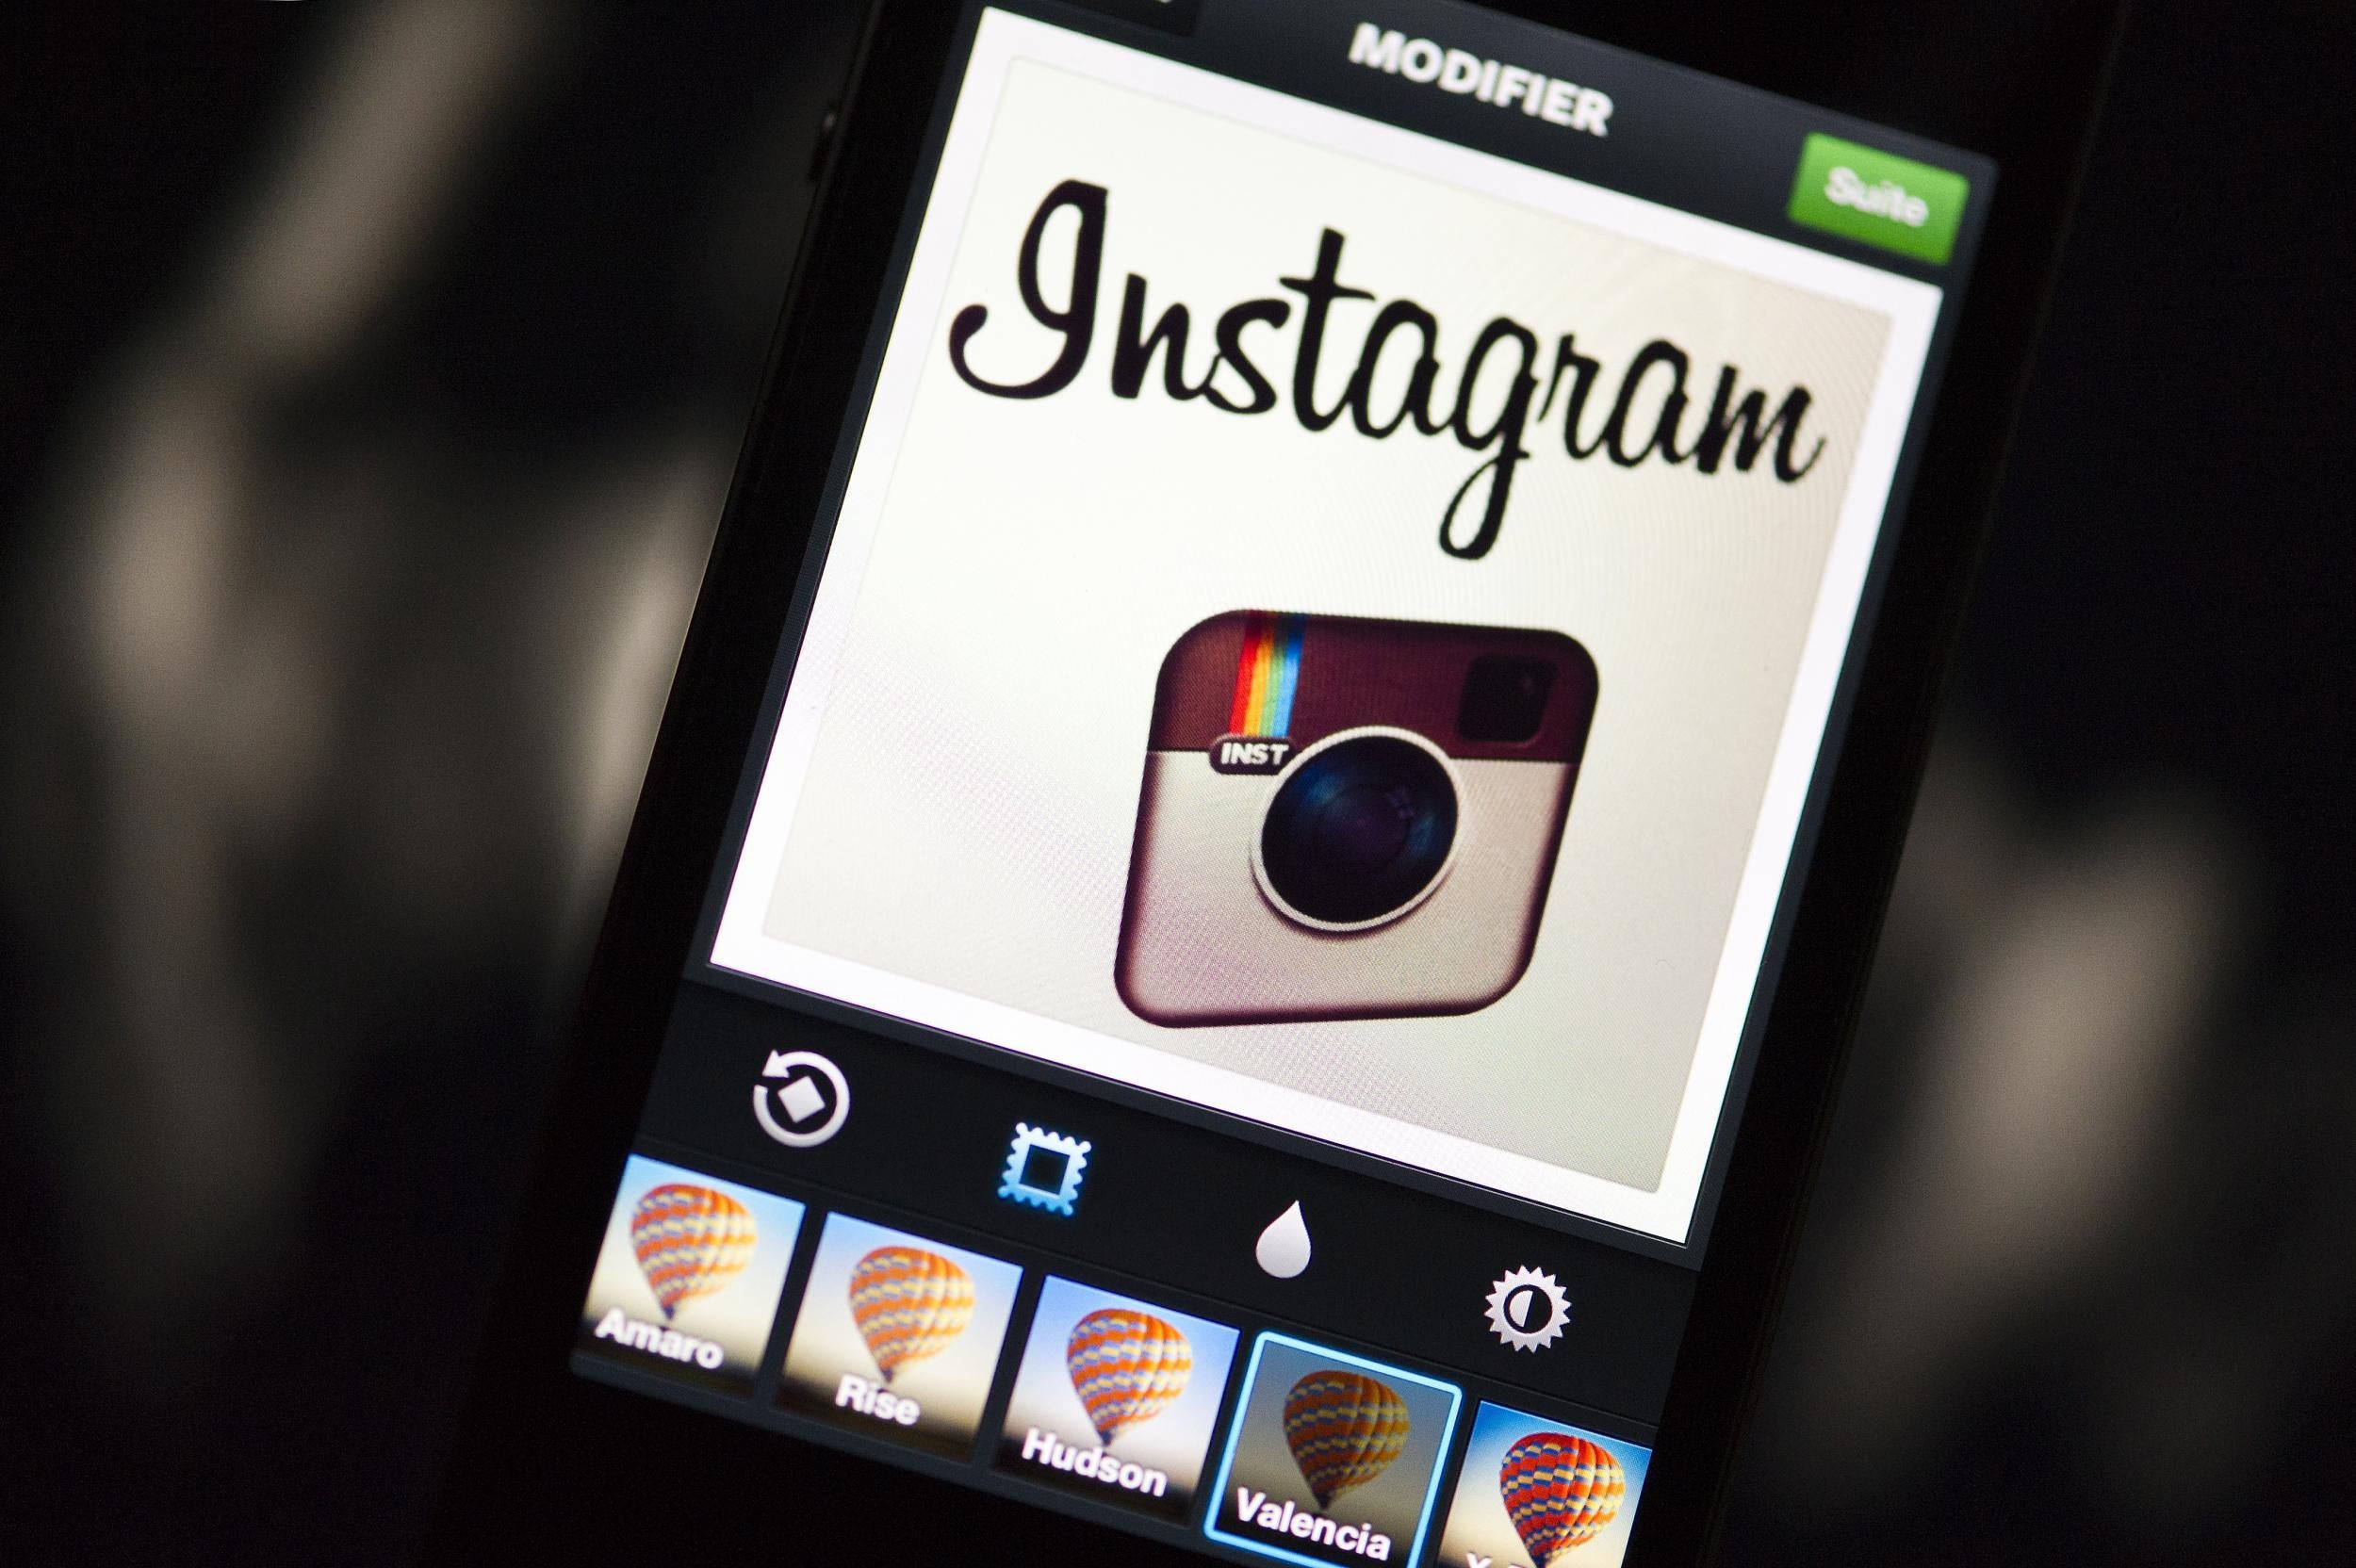 Instagram's logo displayed on a smartphone